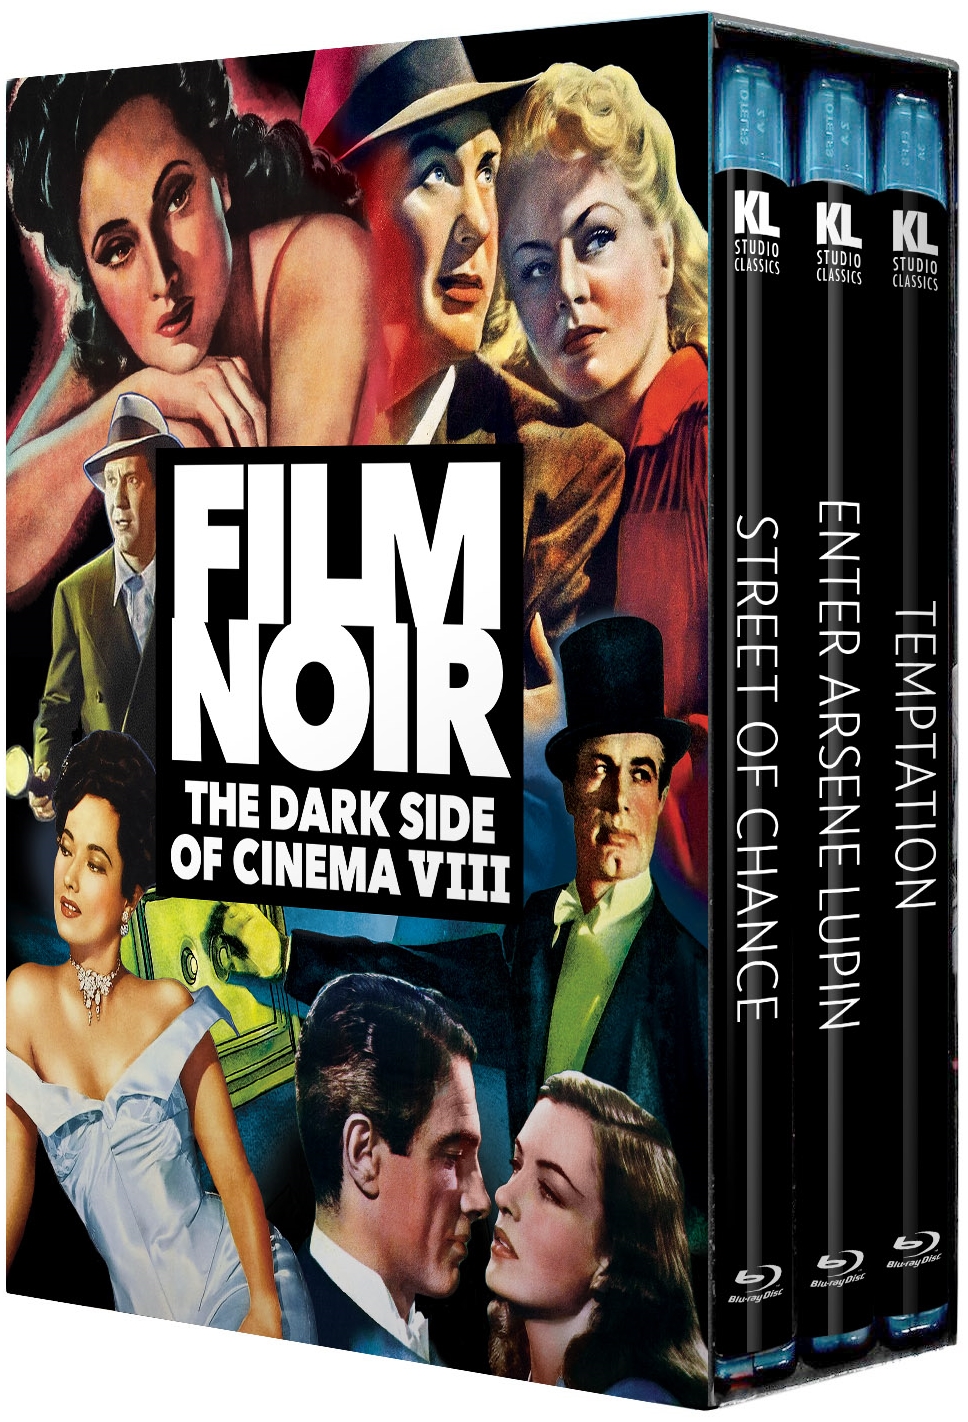 

Film Noir: The Dark Side of Cinema VIII [Blu-ray]